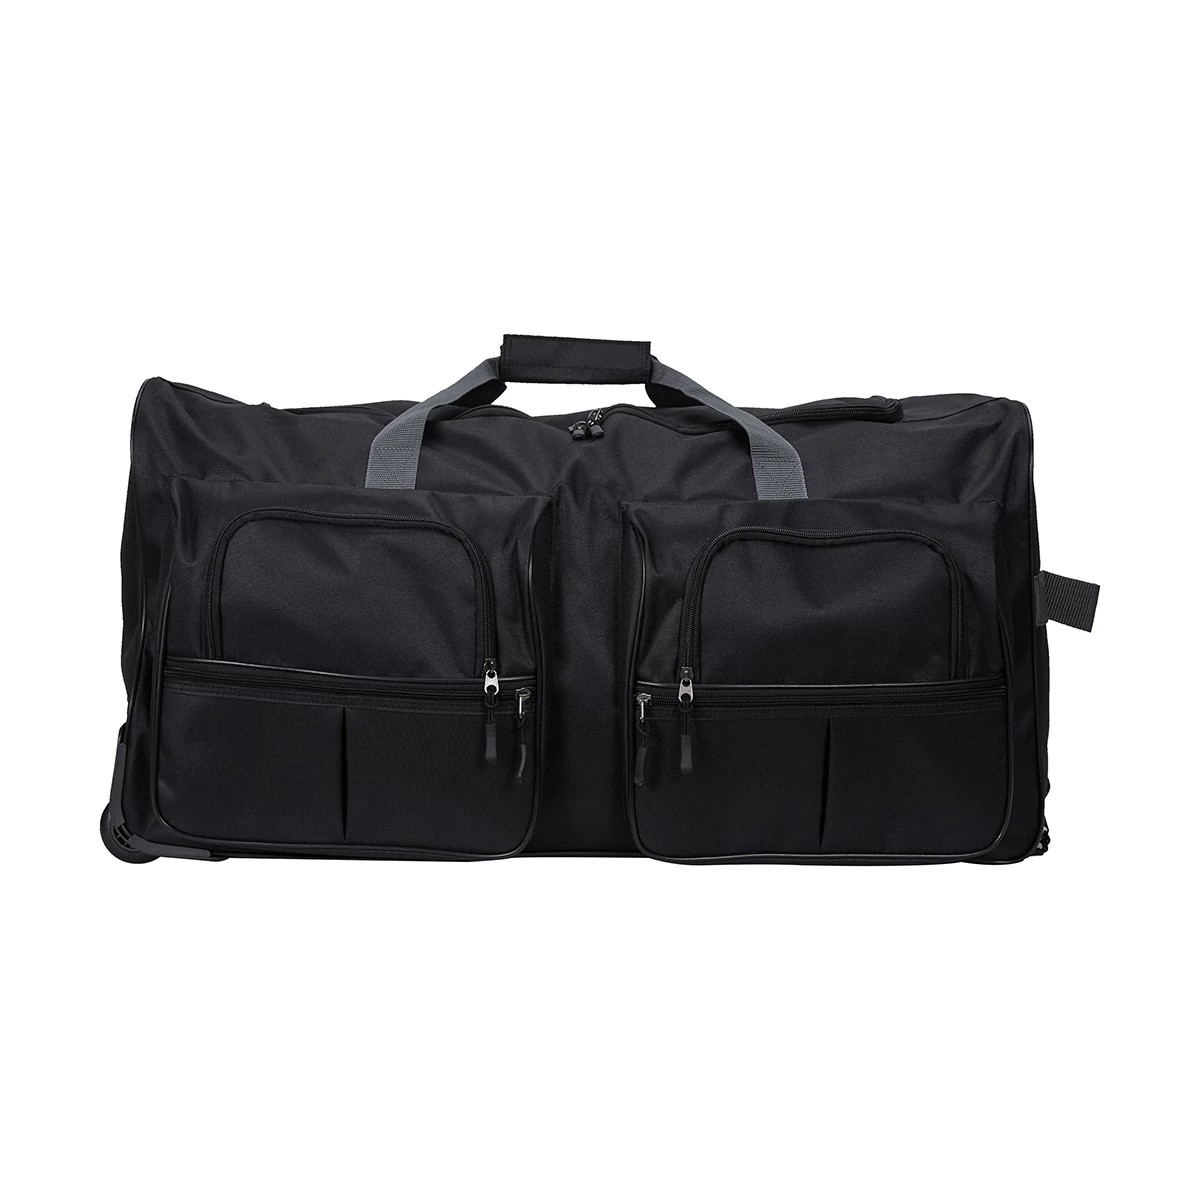 Duffle Bag with Wheels, Black - Anko | Target Australia